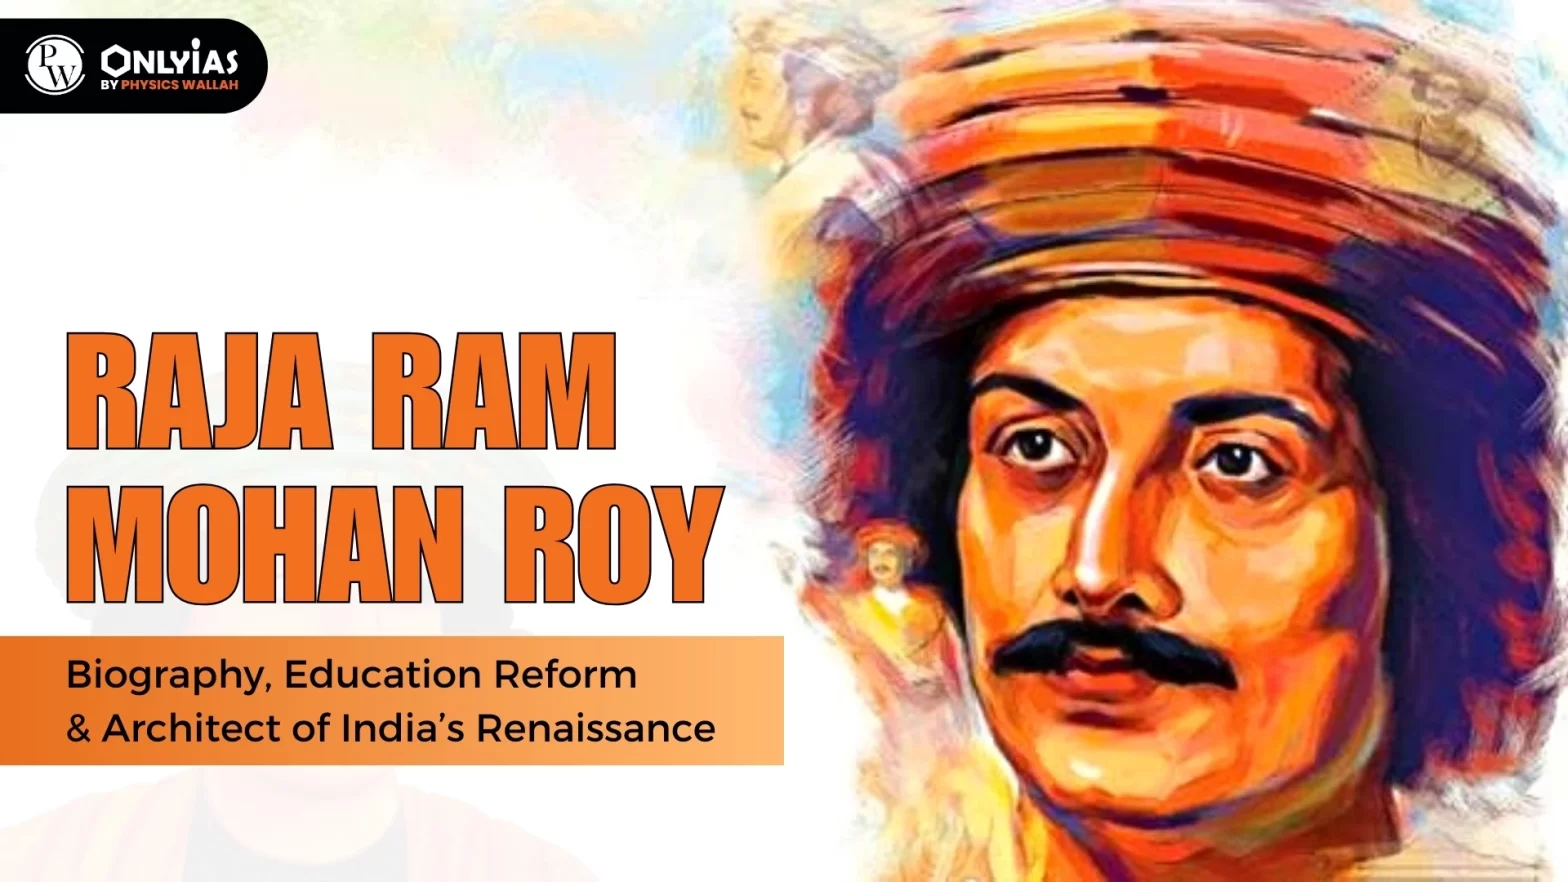 Raja Ram Mohan Roy: Biography, Education Reform & Architect of India’s Renaissance